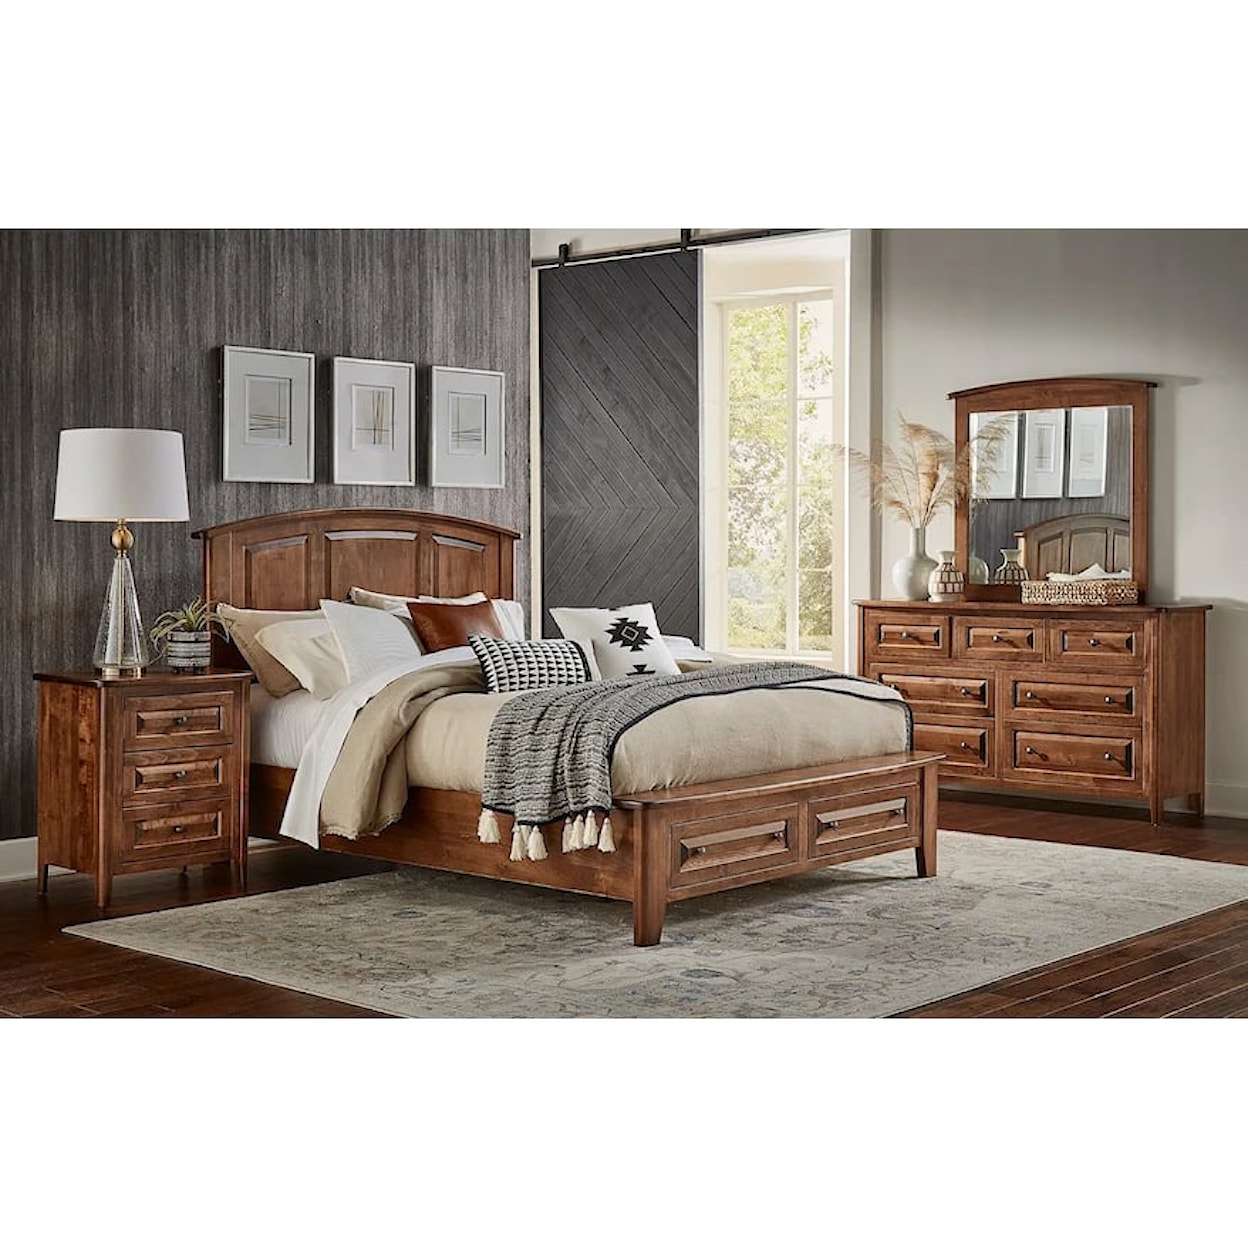 Archbold Furniture Carson Queen Storage Bedroom Set